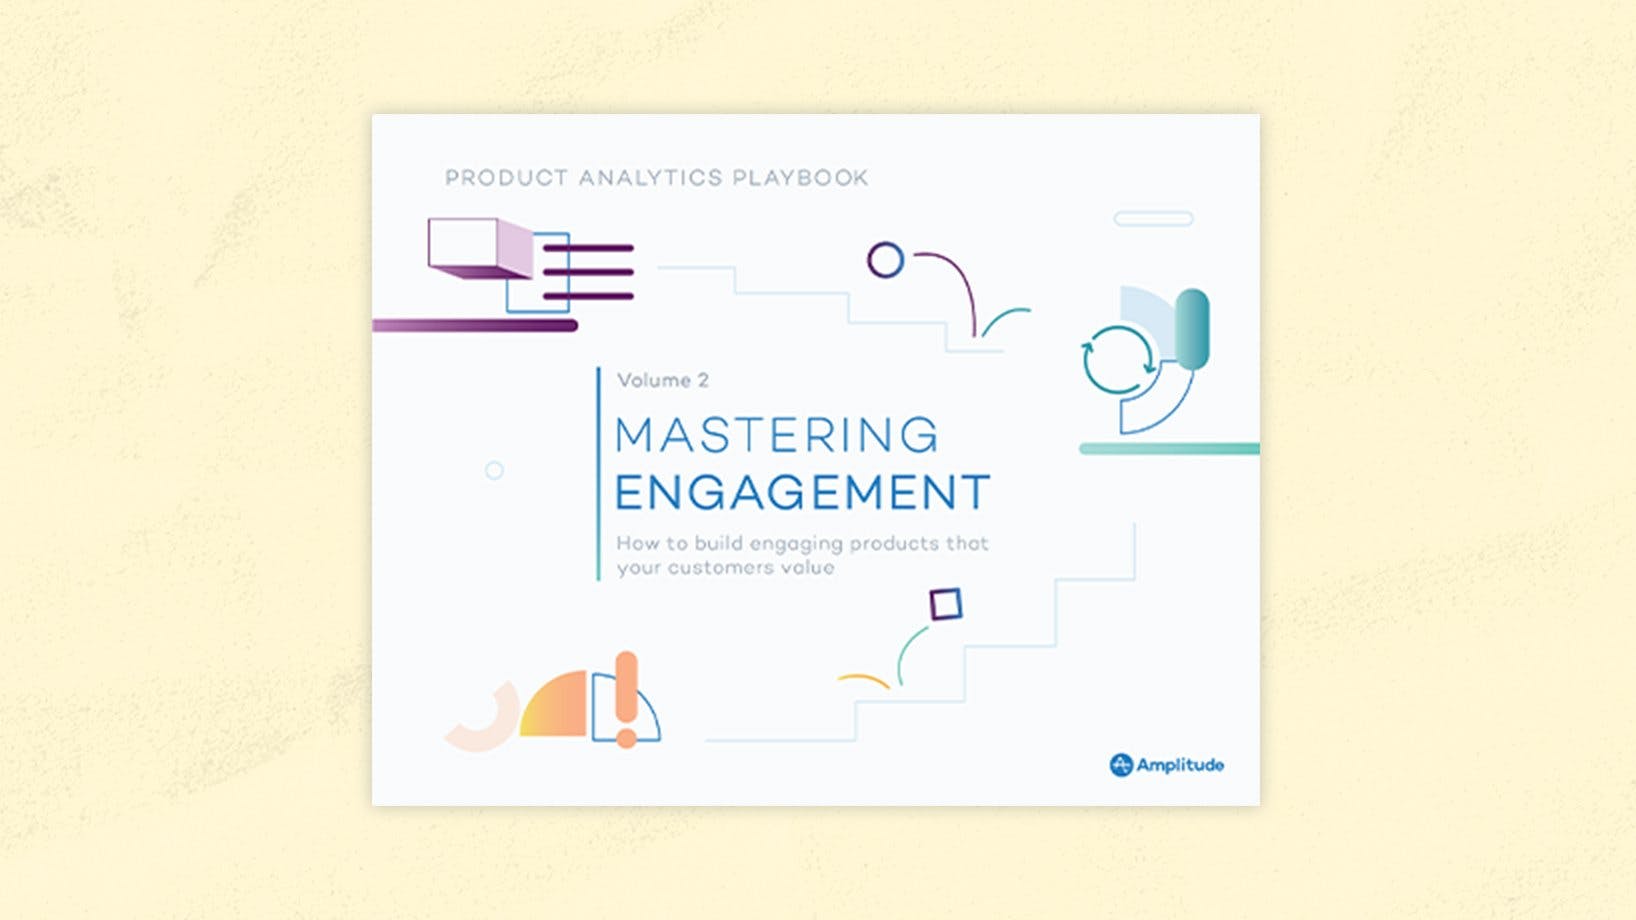 Product Analytics Playbook: Mastering Engagement